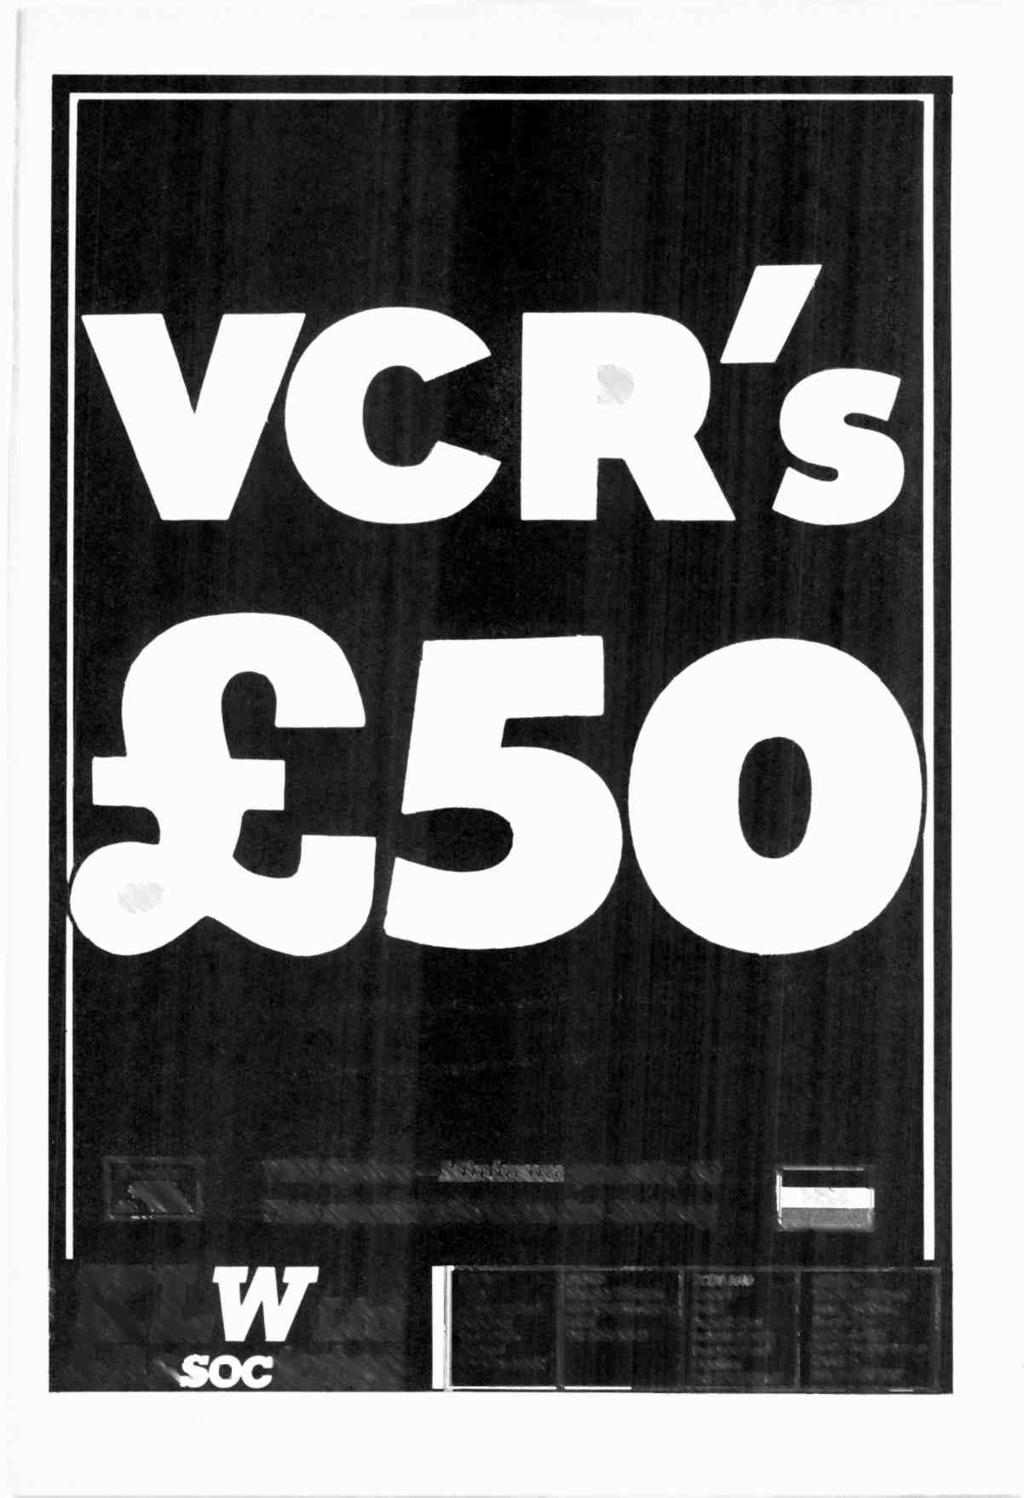 Access VHS System Minimum quantity 20 This special offer ends Sat 31st Aug VISA